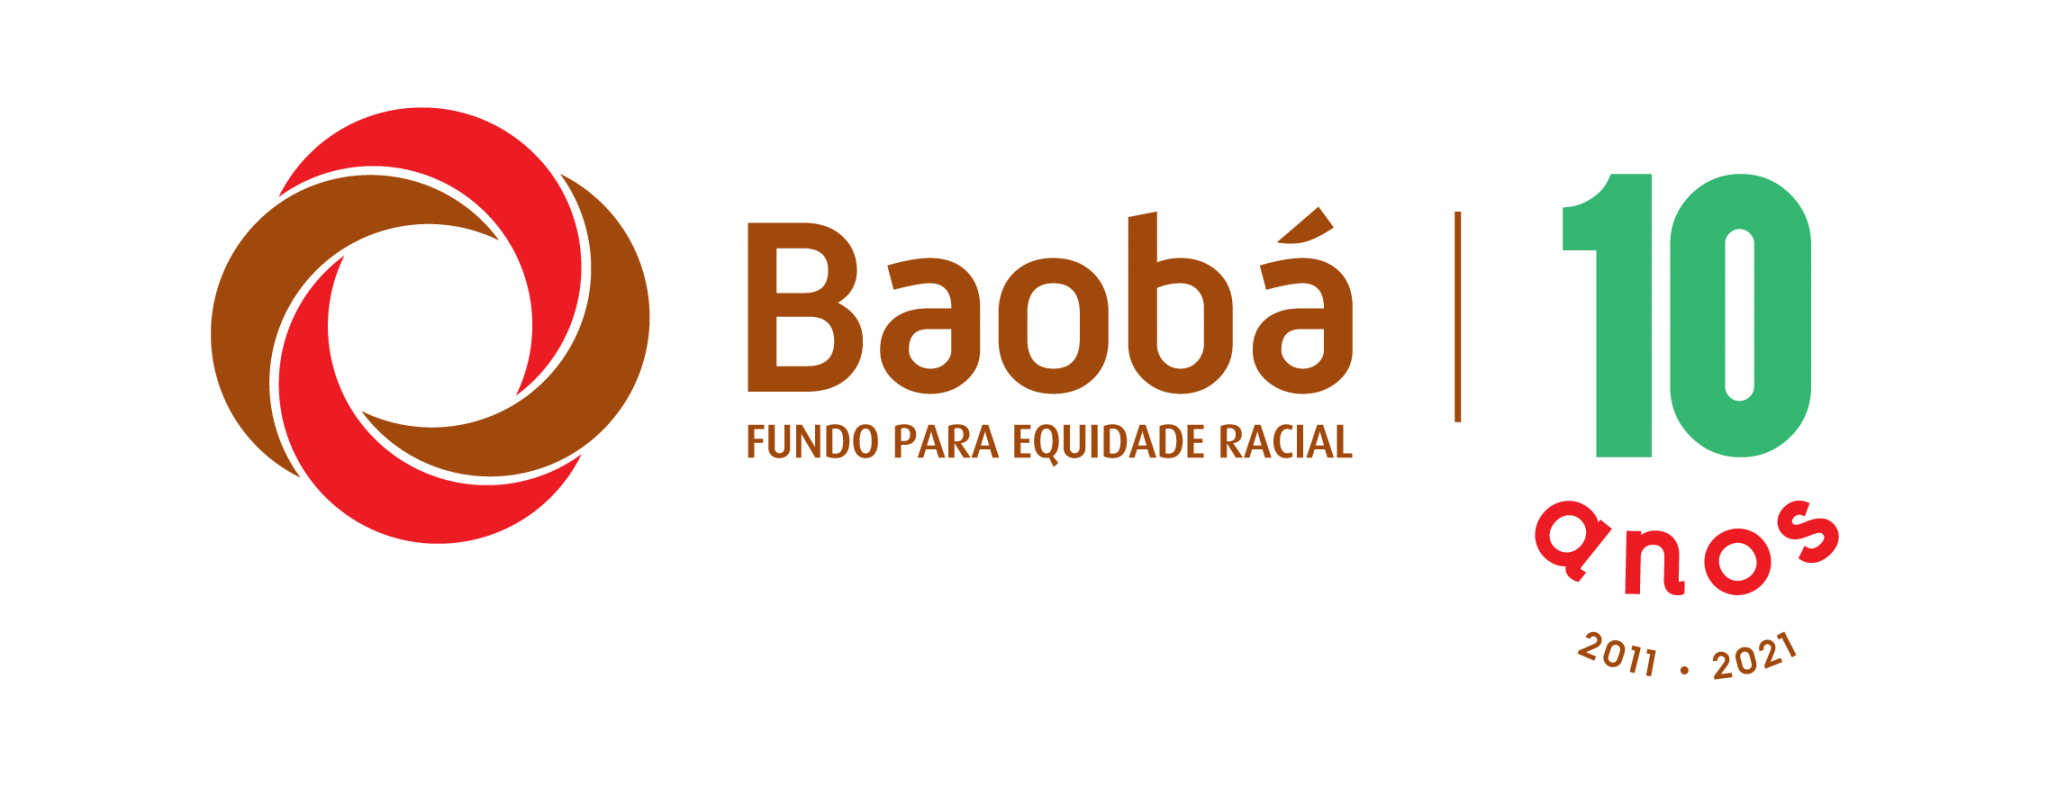 Edital Programa Já É - Baobá